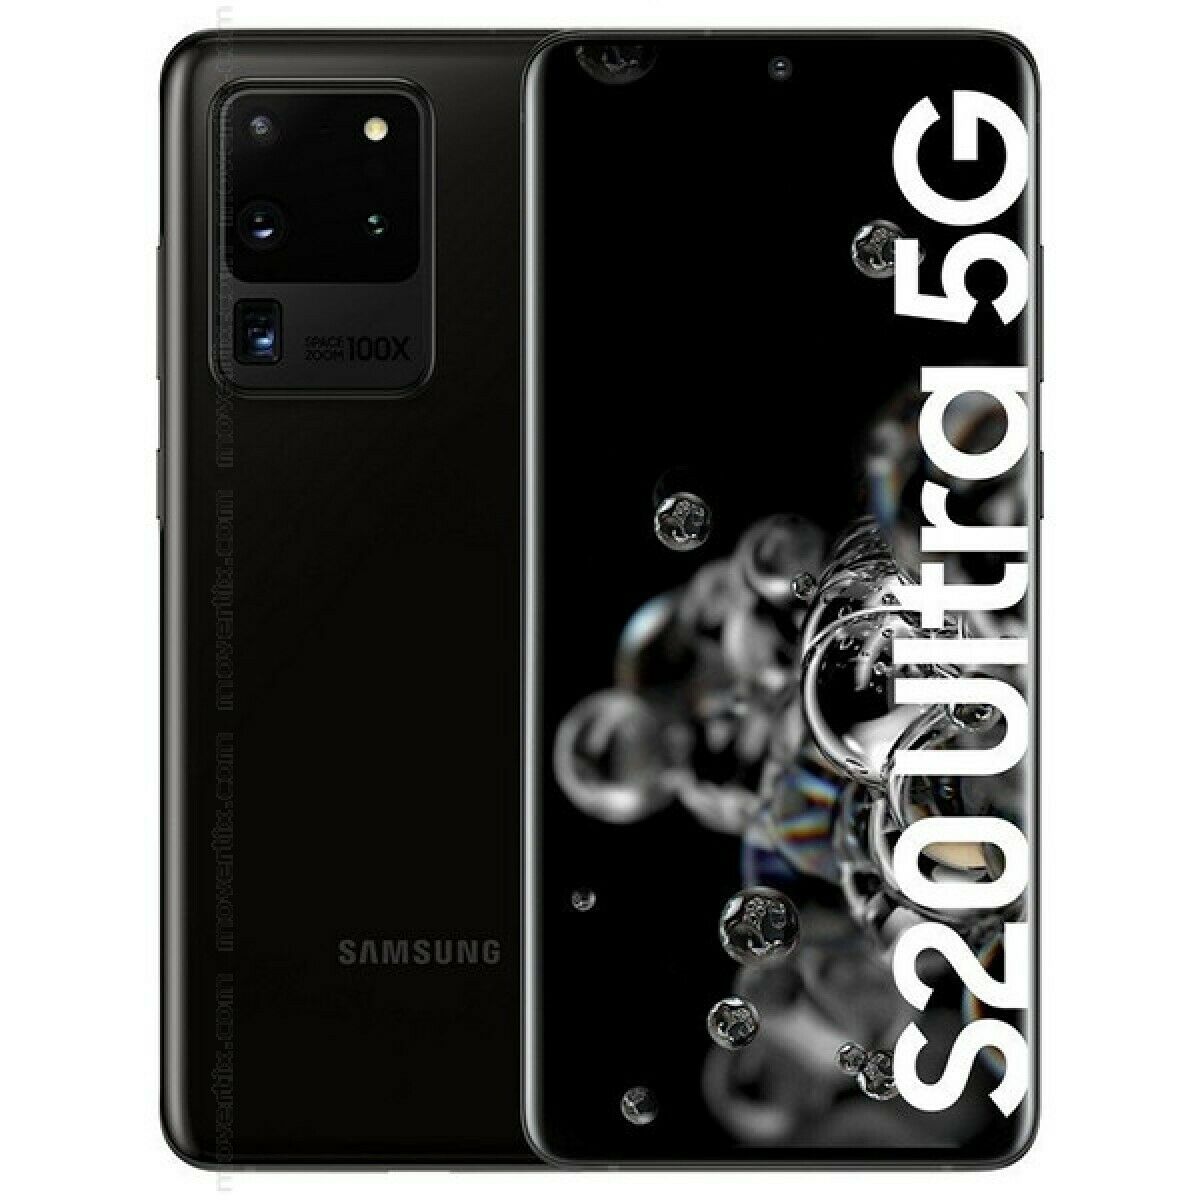 Samsung Galaxy S20 Ultra 5G Unlocked Smartphone - 128GB, 512GB in Black or Grey